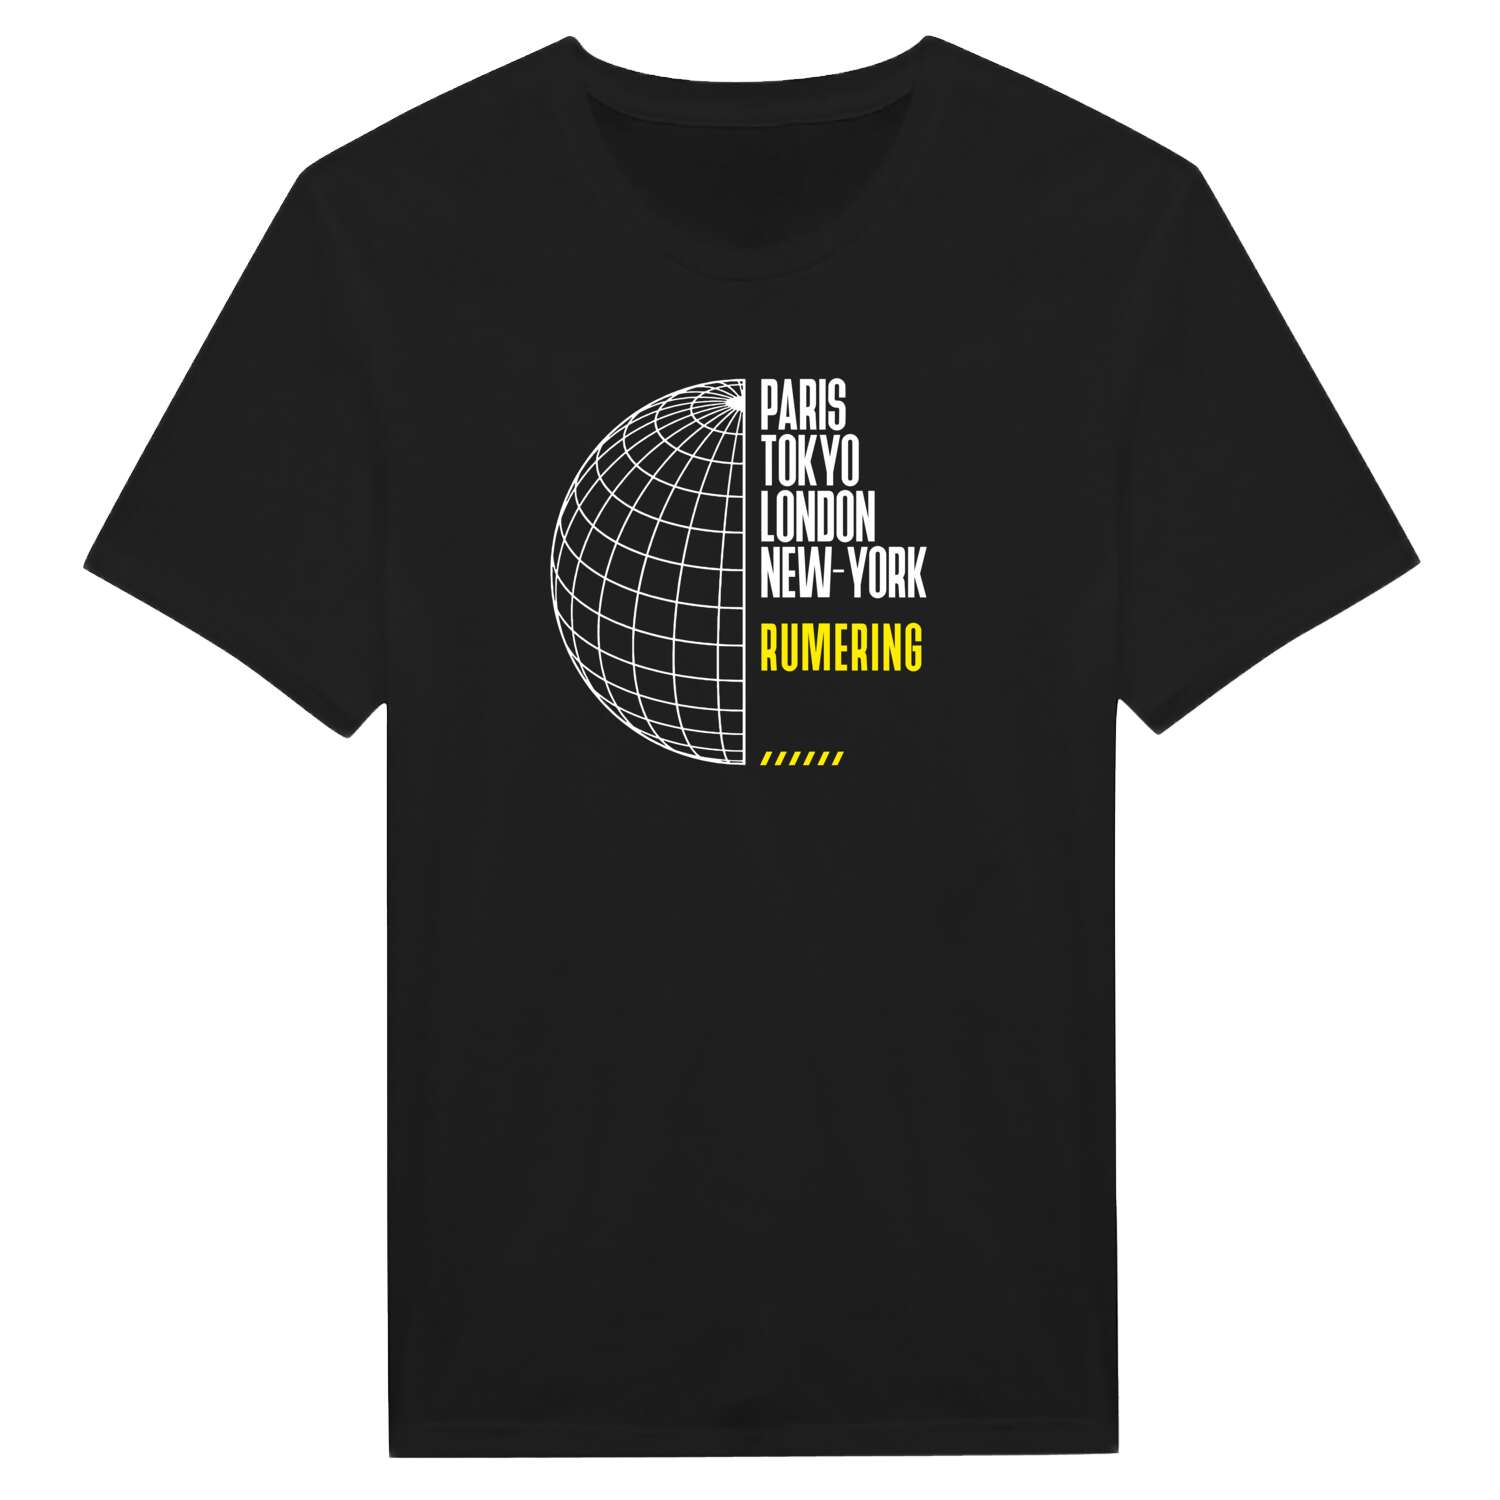 Rumering T-Shirt »Paris Tokyo London«